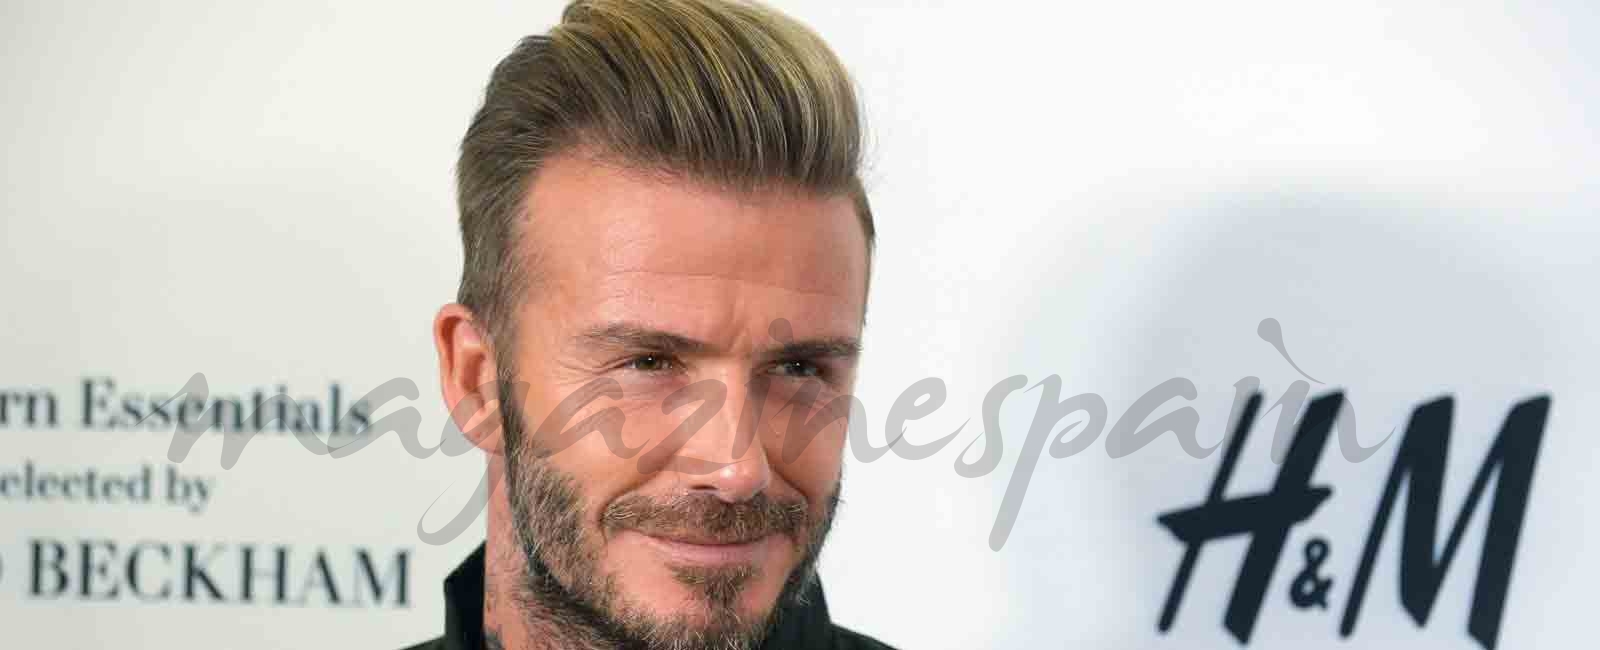 Así eran, Así son: David Beckham 2006-2016